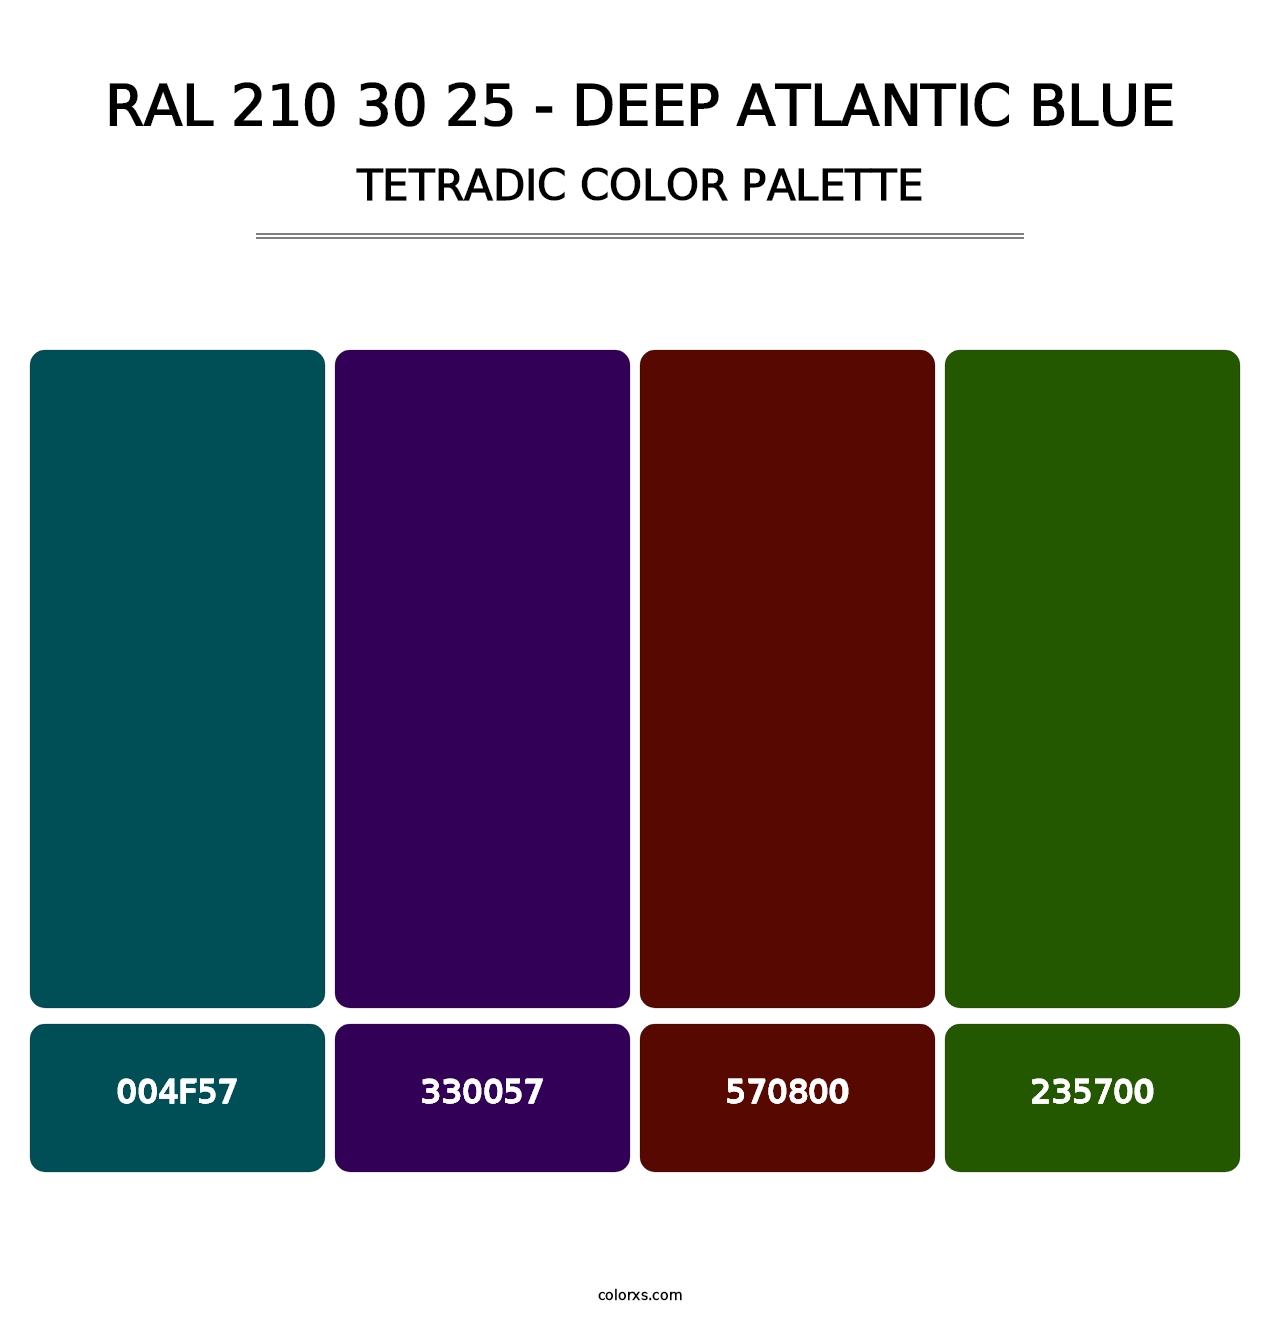 RAL 210 30 25 - Deep Atlantic Blue - Tetradic Color Palette